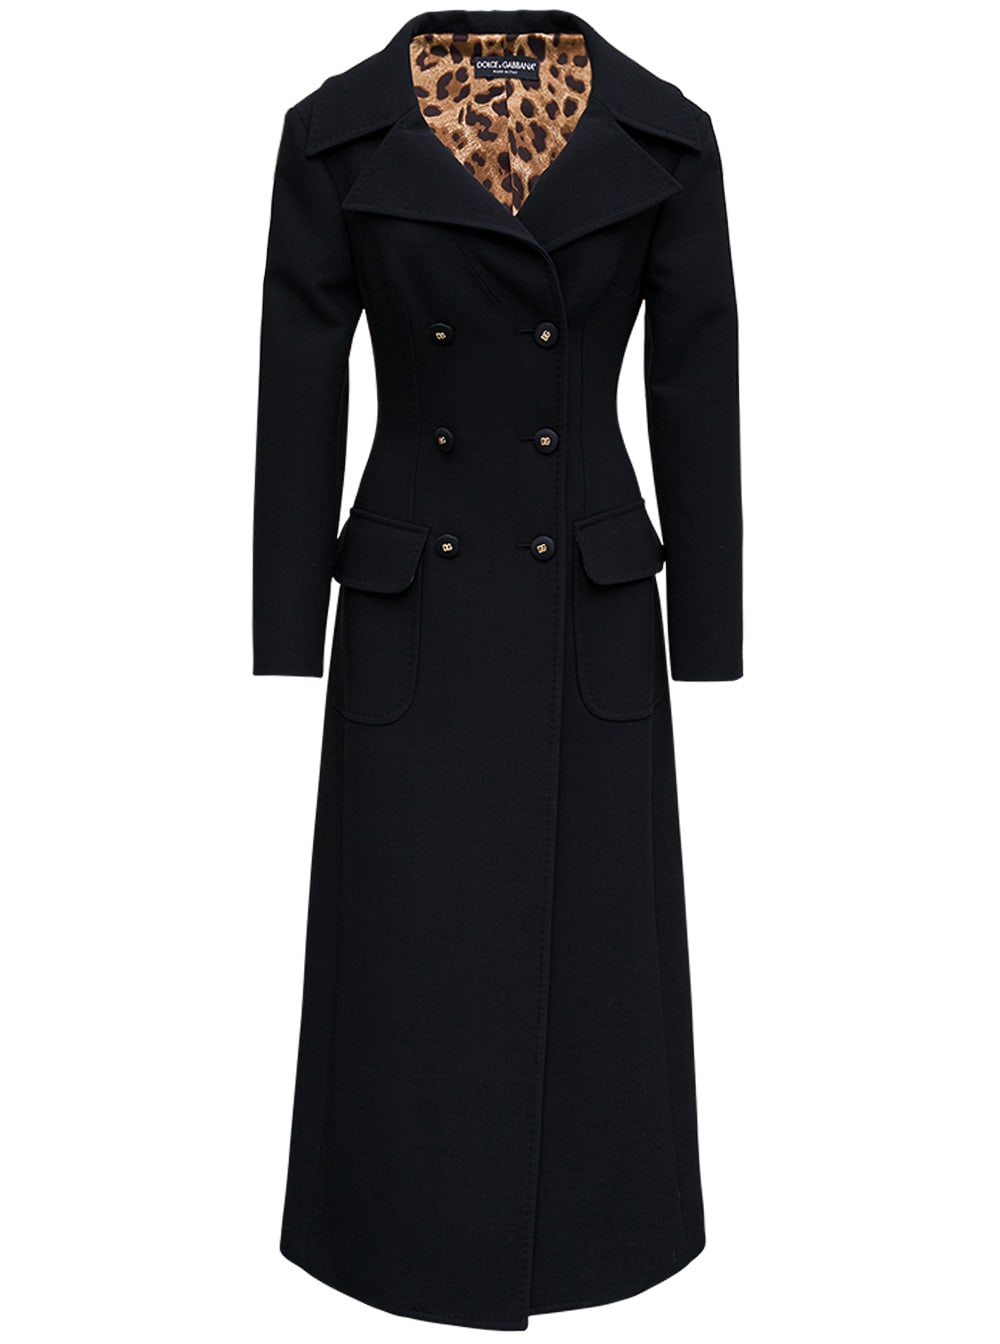 Dolce & Gabbana double-breasted black wool long coat